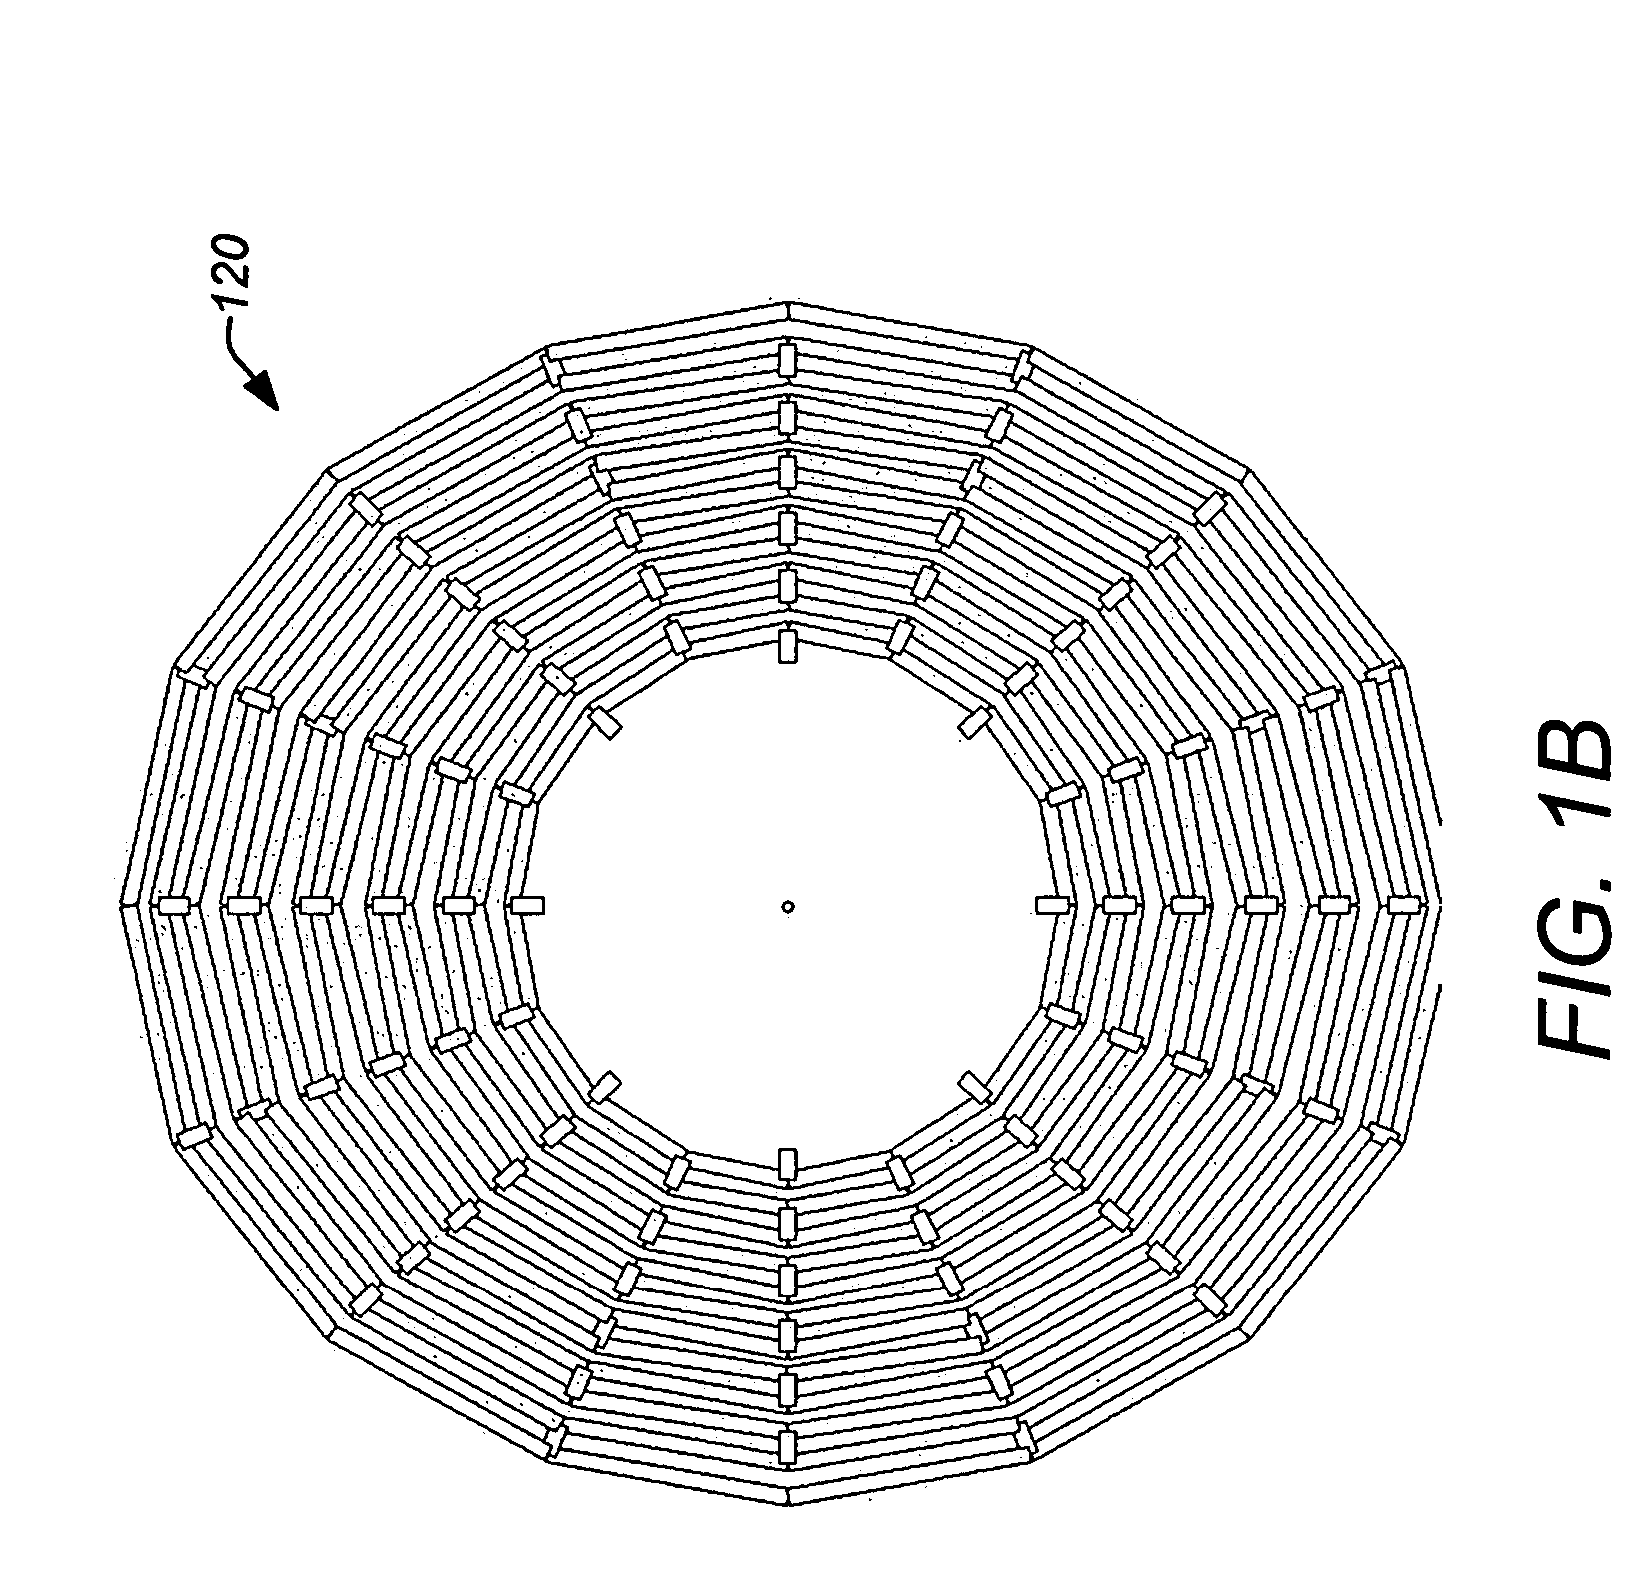 Parametrically disciplined operation of a vibratory gyroscope